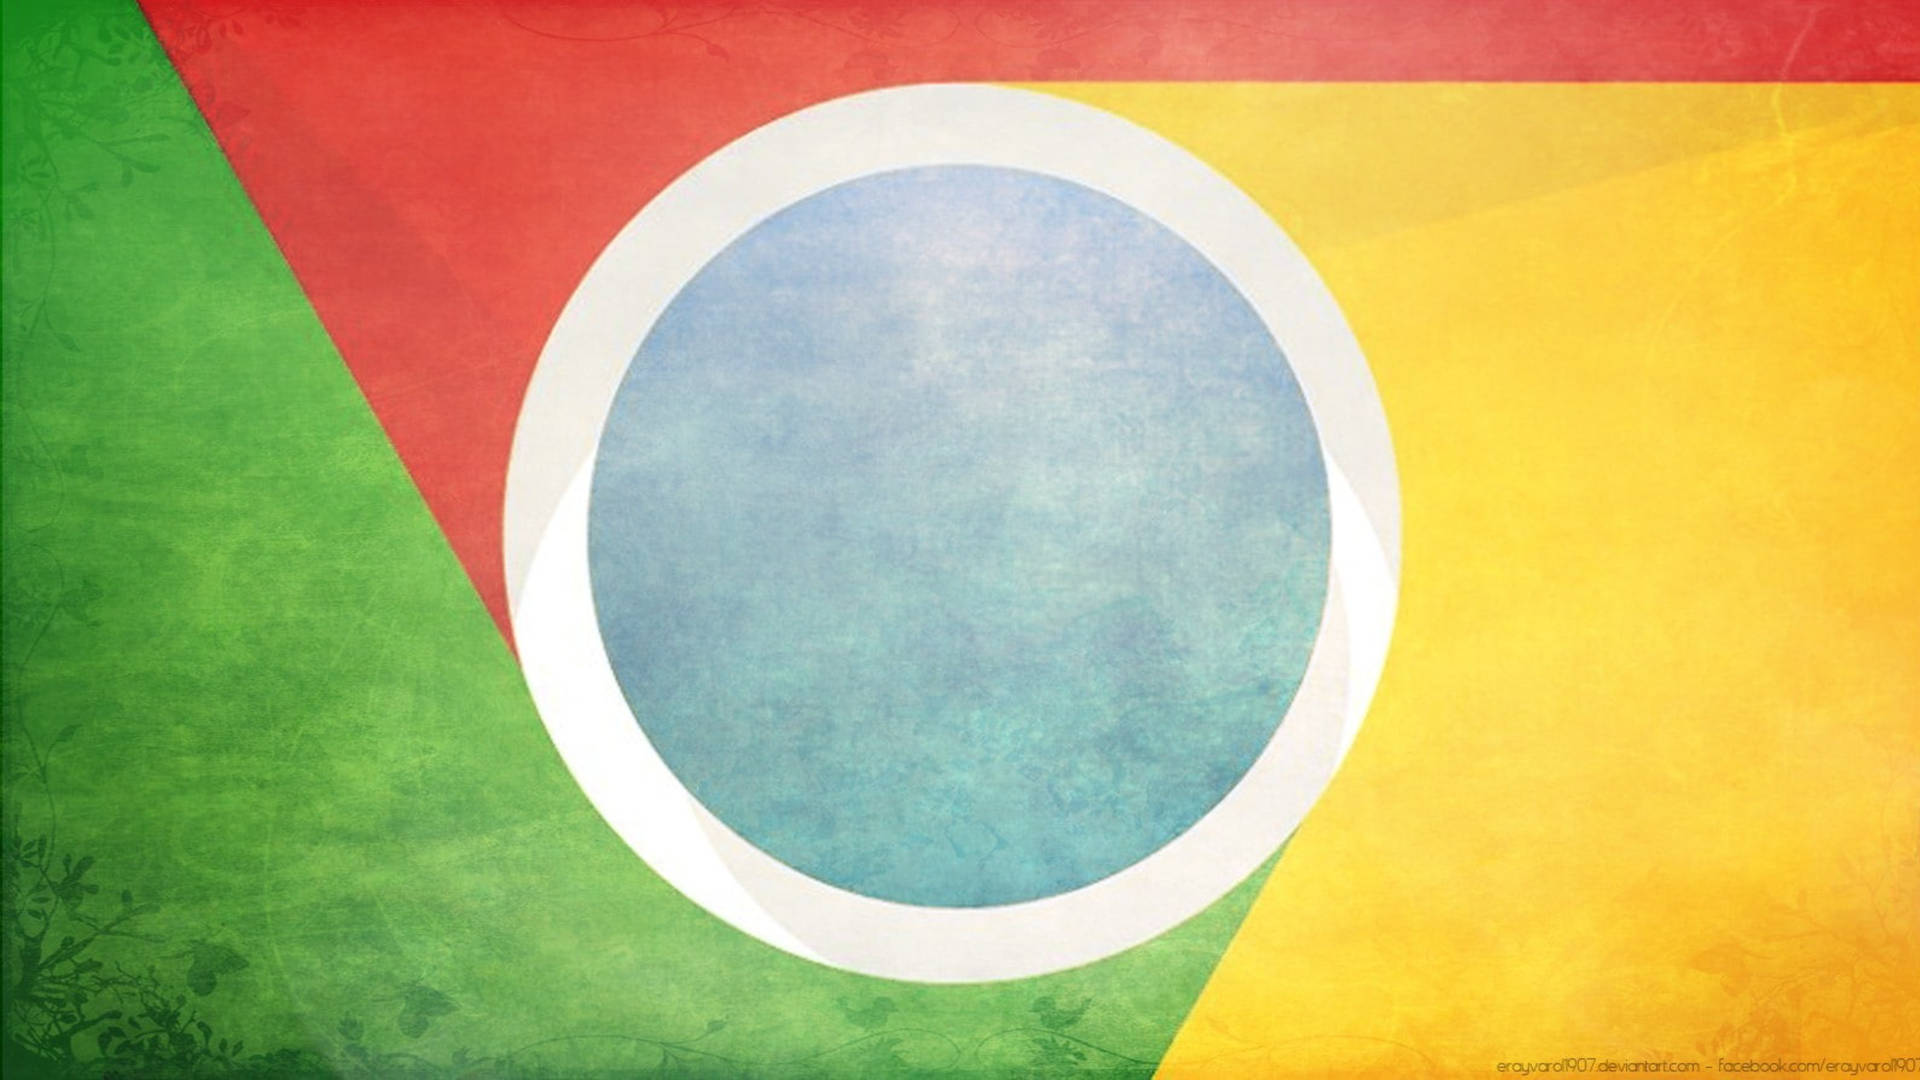 Retro-themed Google Chrome Background